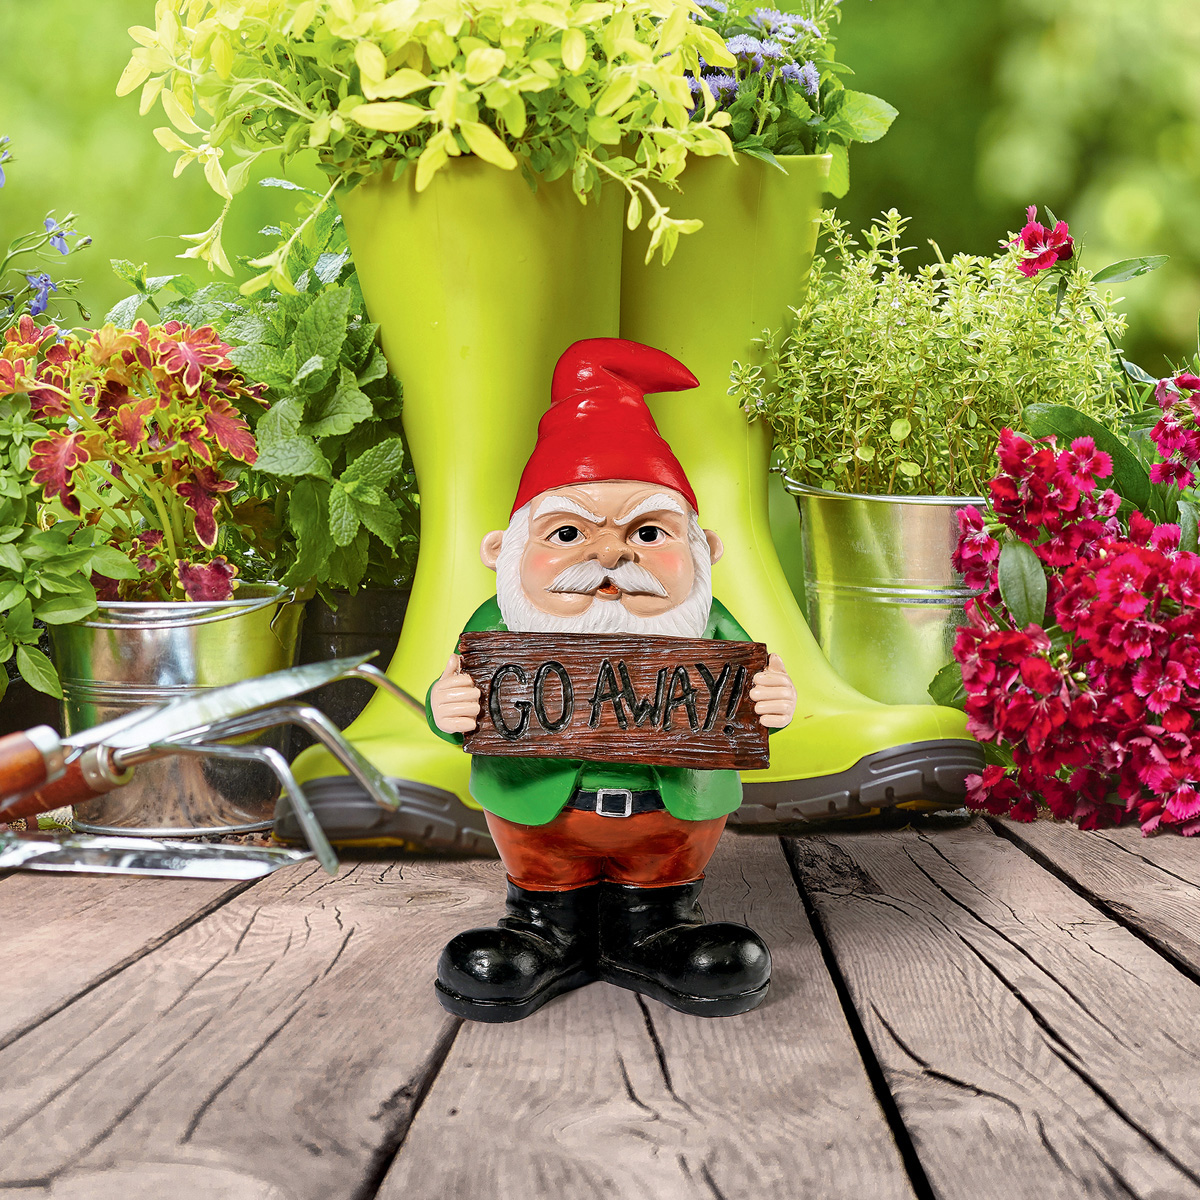 Image Thumbnail for Mr Bad Attitude "Go Away" Gnome Statue